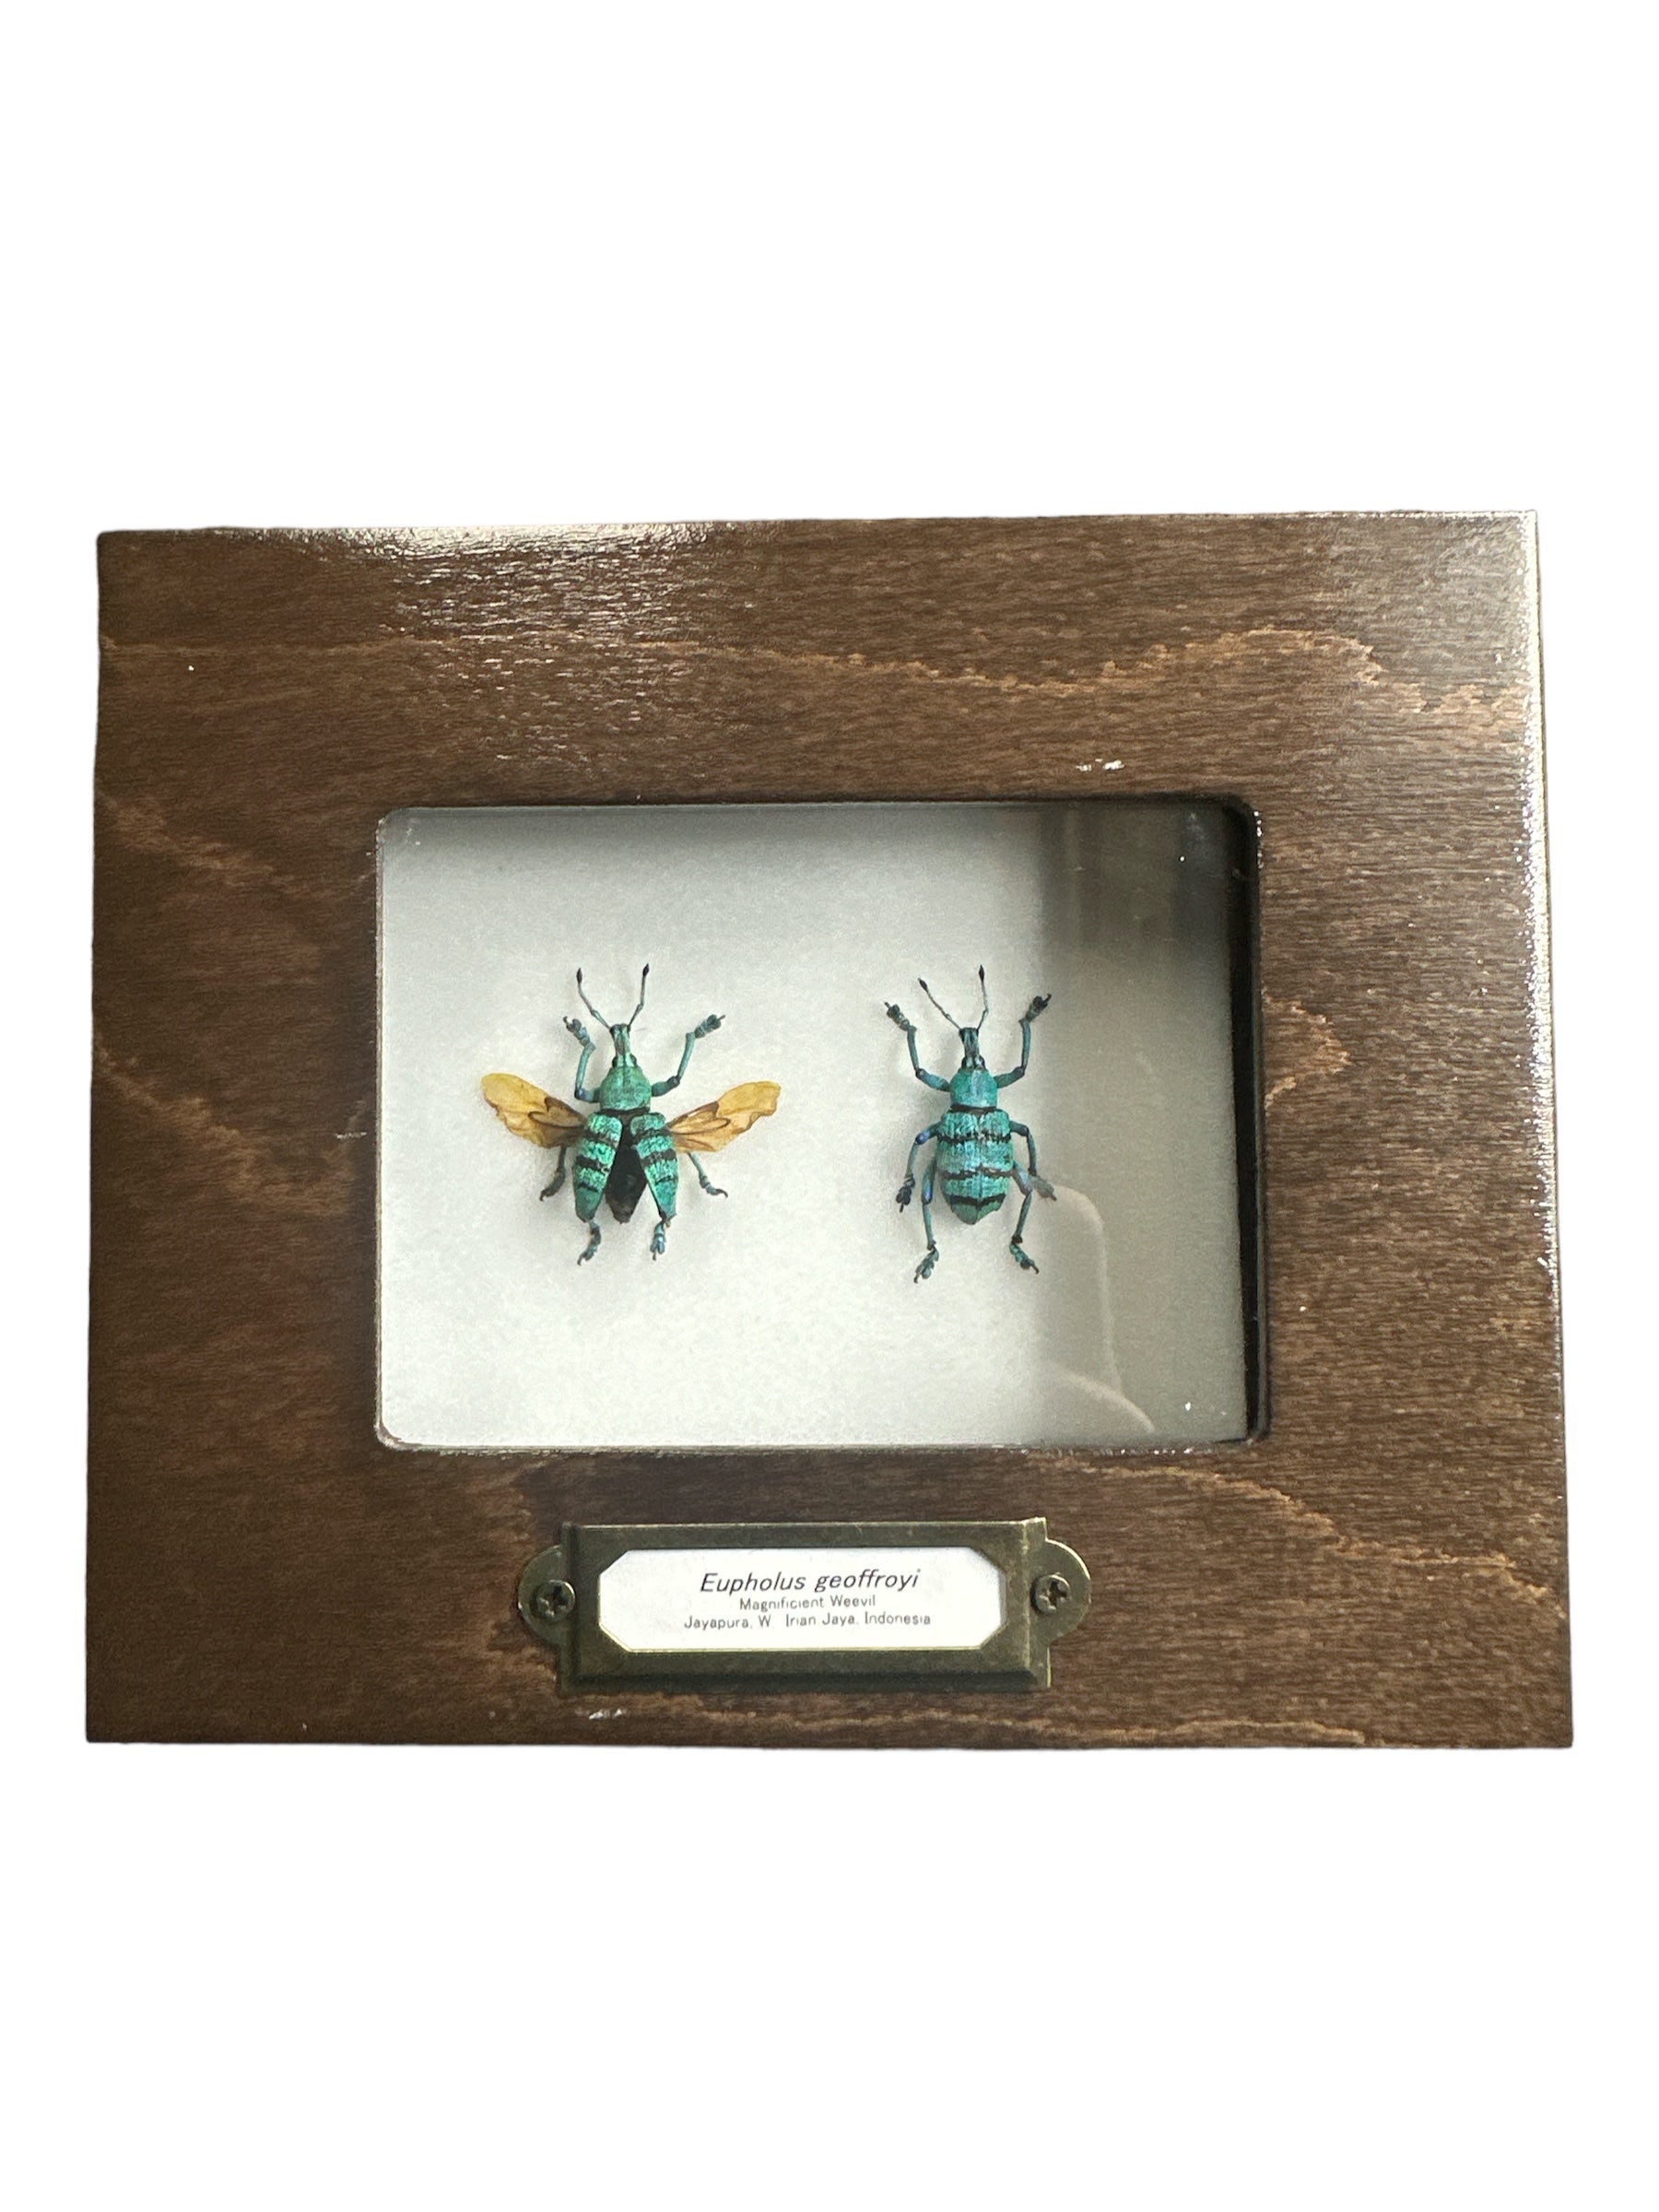 Blue Weevil (Eupholus geoffroyi) - 2x3" Frame